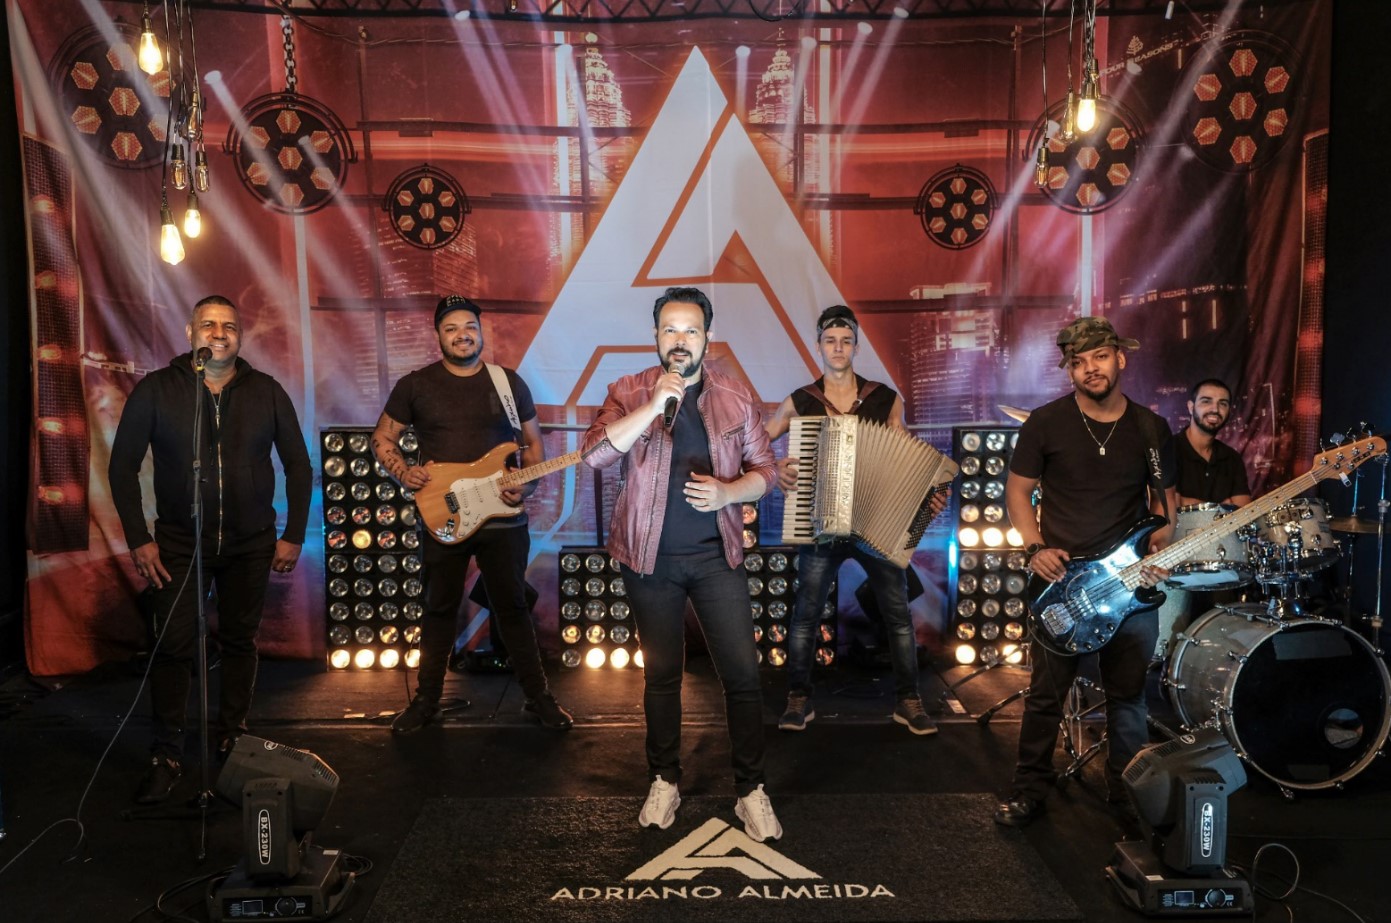 EP do cantor Adriano Almeida ganha destaque nas redes sociais 43